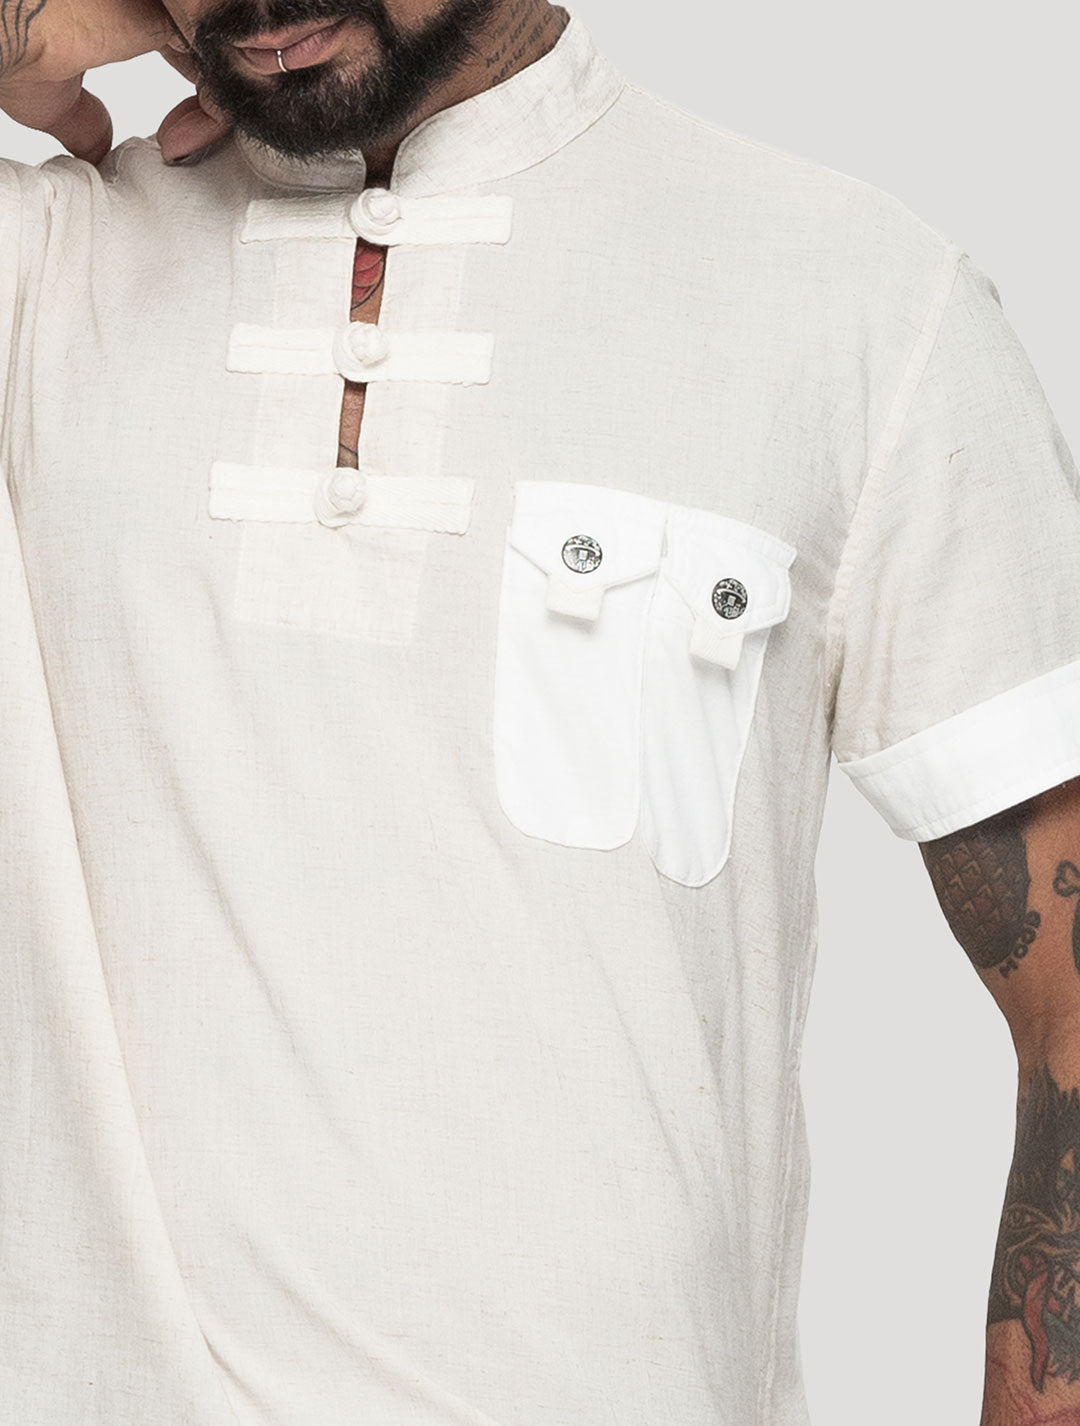 Off White 'Taiji' Short Sleeves Shirt - Psylo Fashion